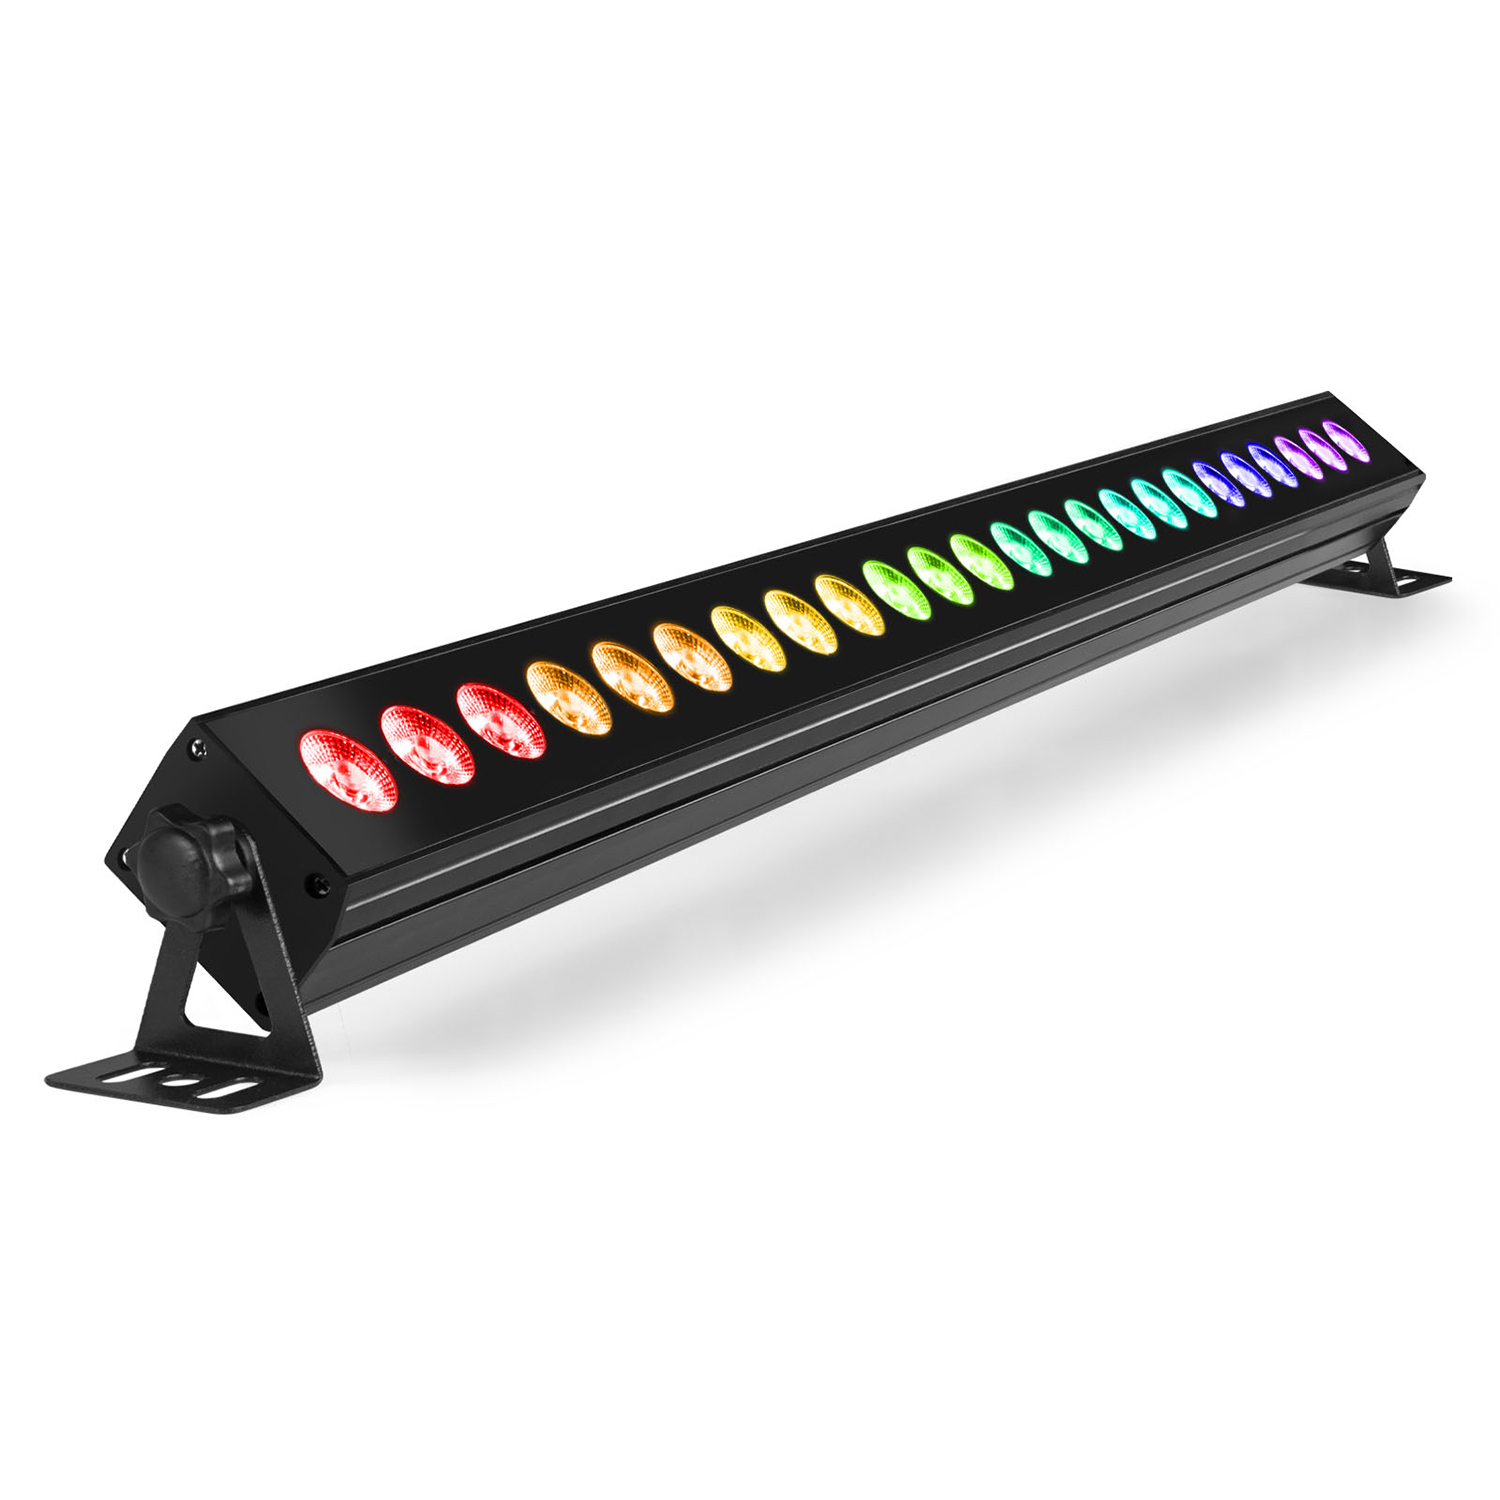 BeamZ LCB246 Aluminium LED Light Bar 24x6W RGBWA-UV - Stage Concepts